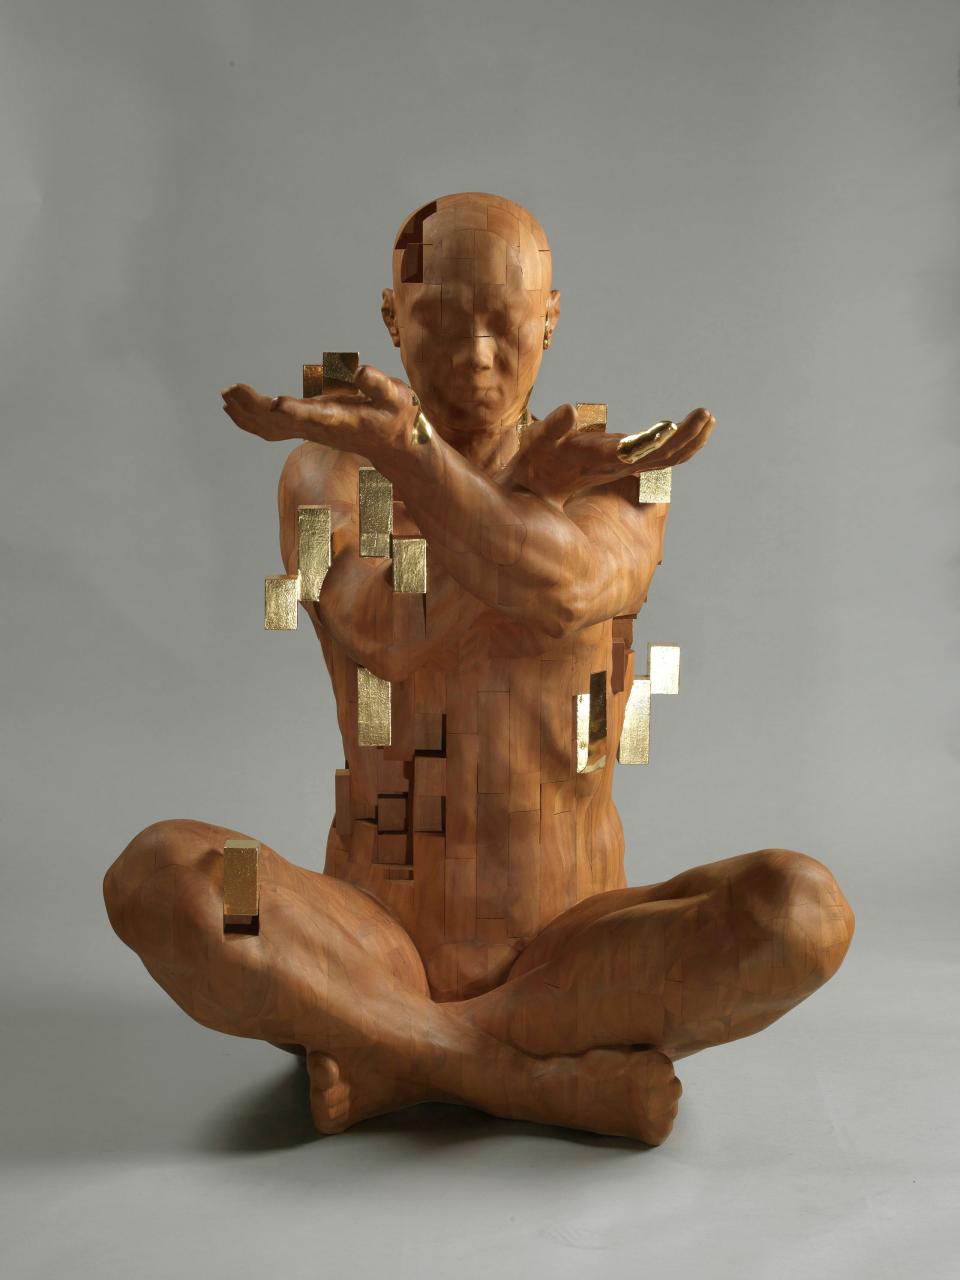 Splendid Wood Sculptures Of Pixelated Figures By Hsu Tung Han 10